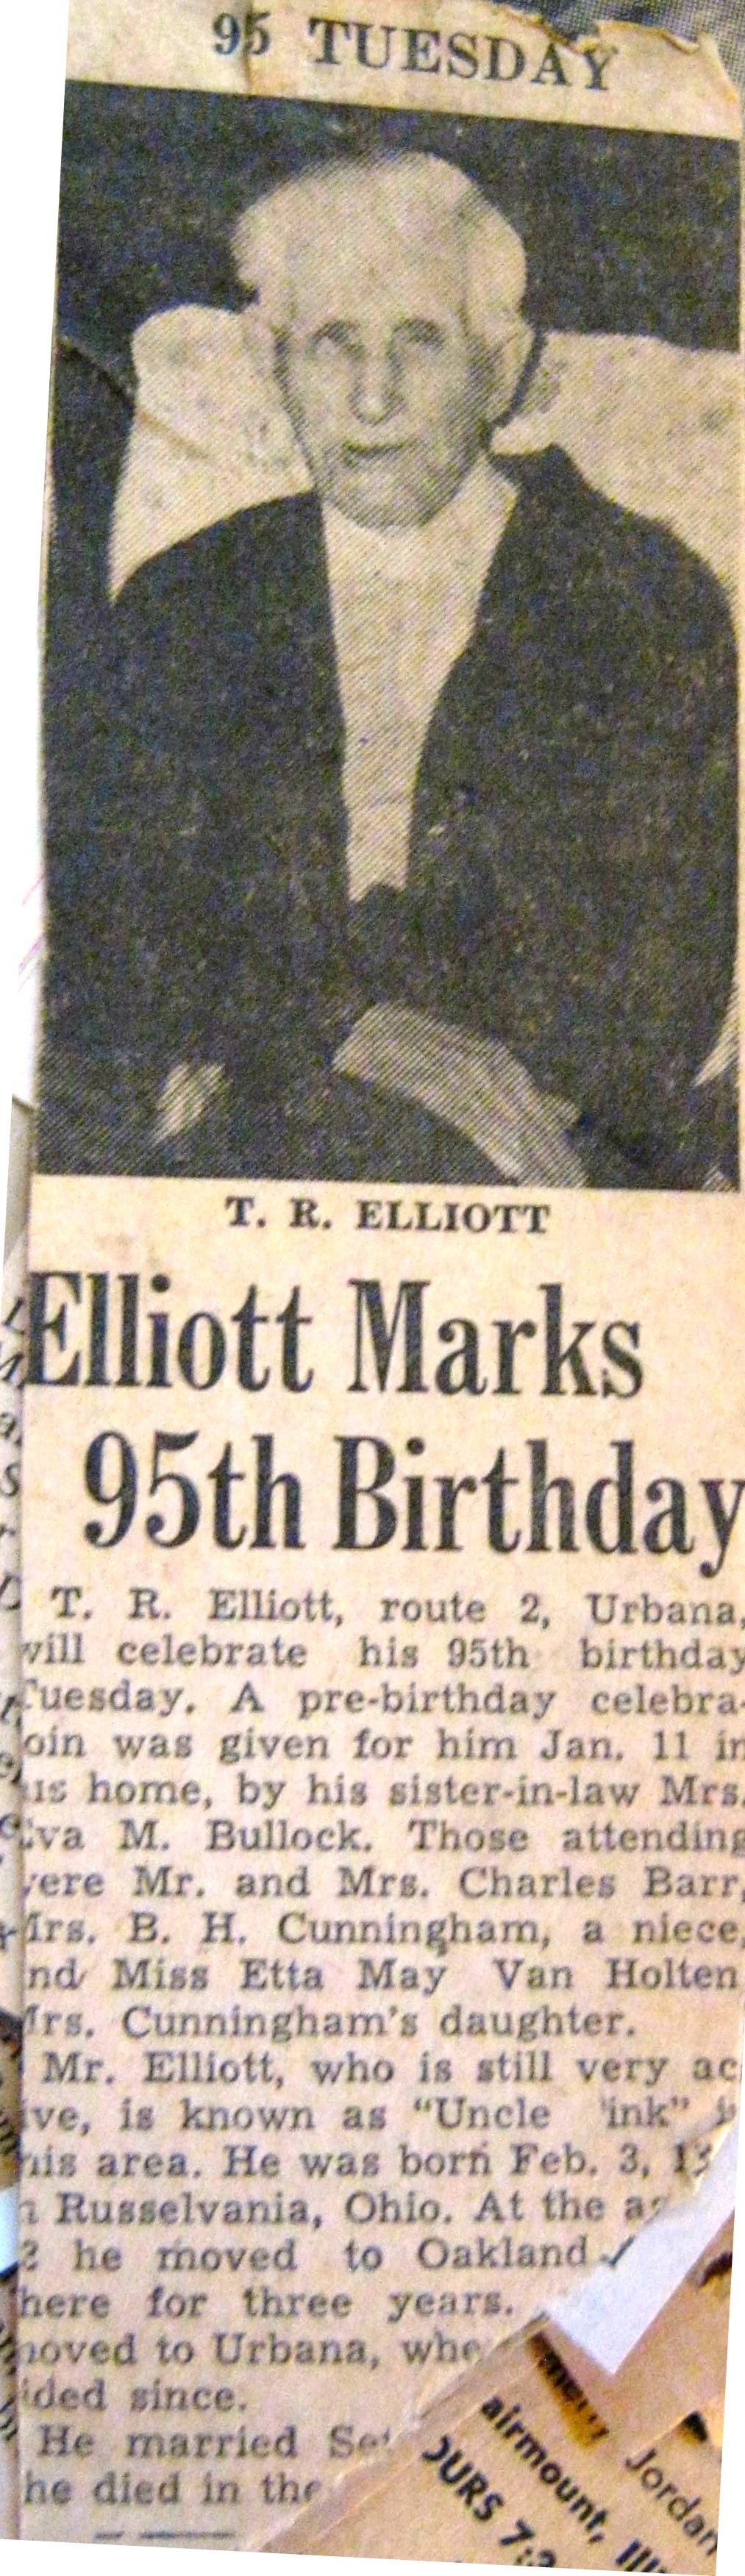 Thomas R. Elliott's 95th Brithday